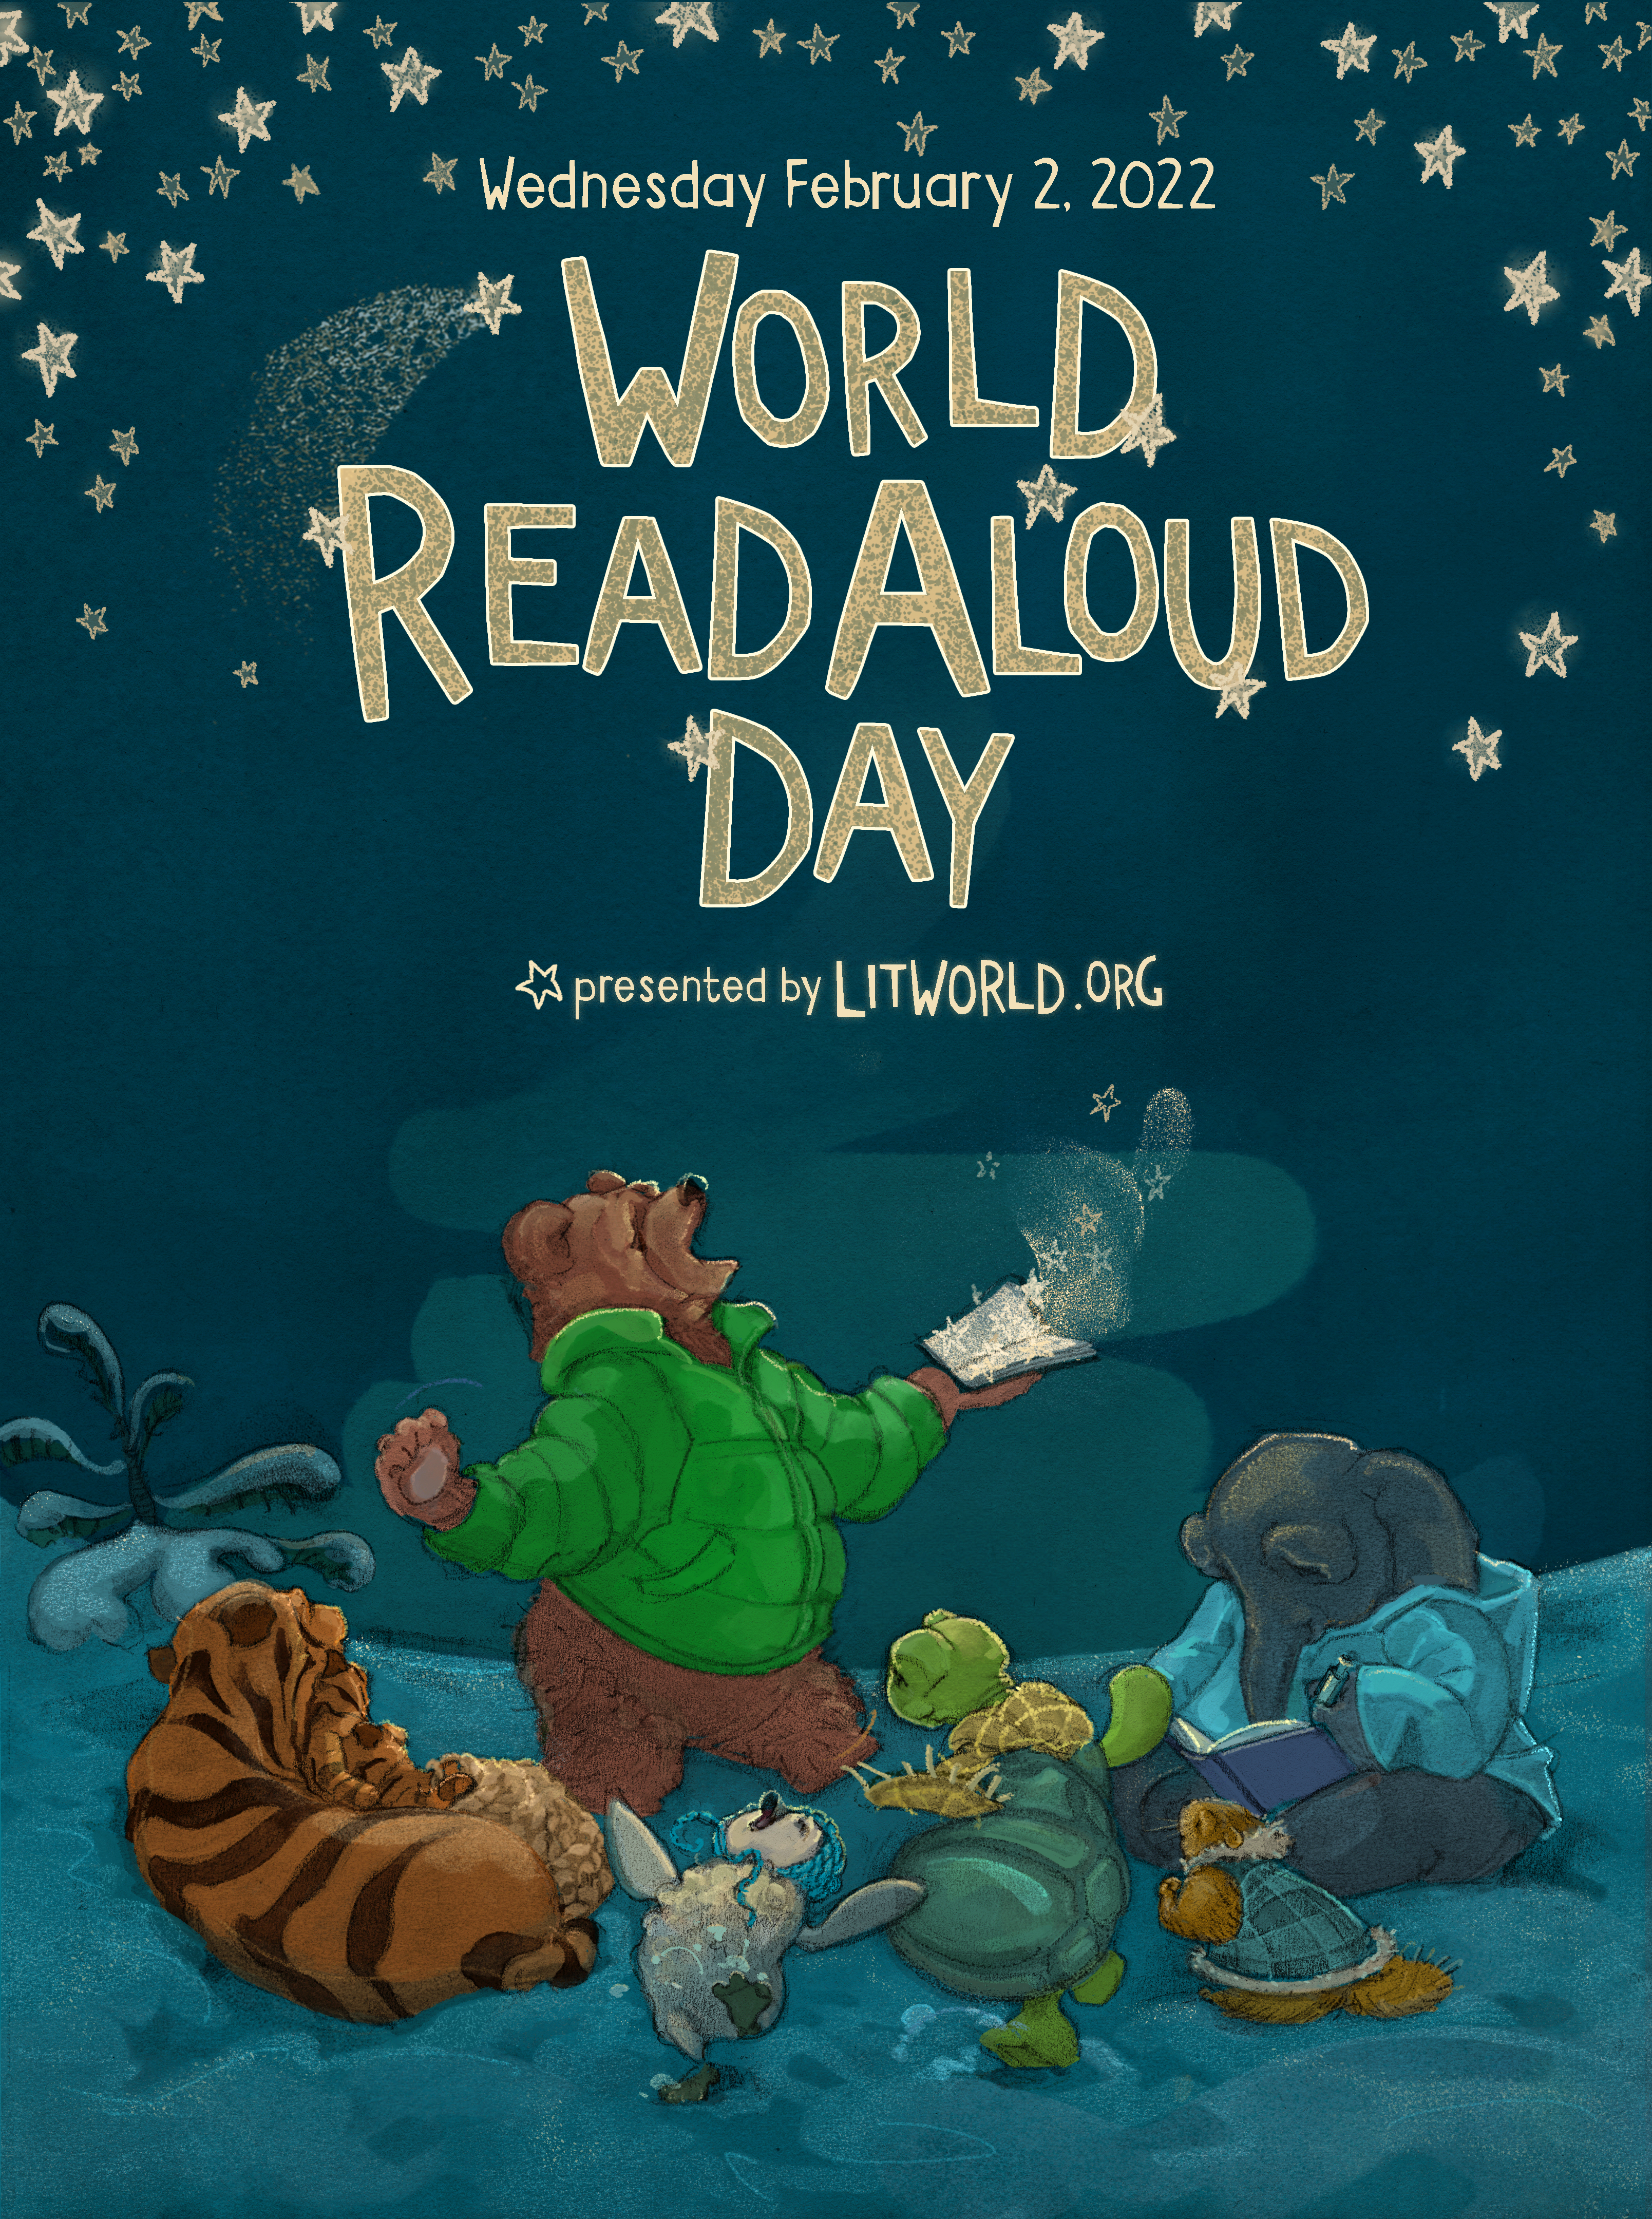 World Read Aloud Day 2022